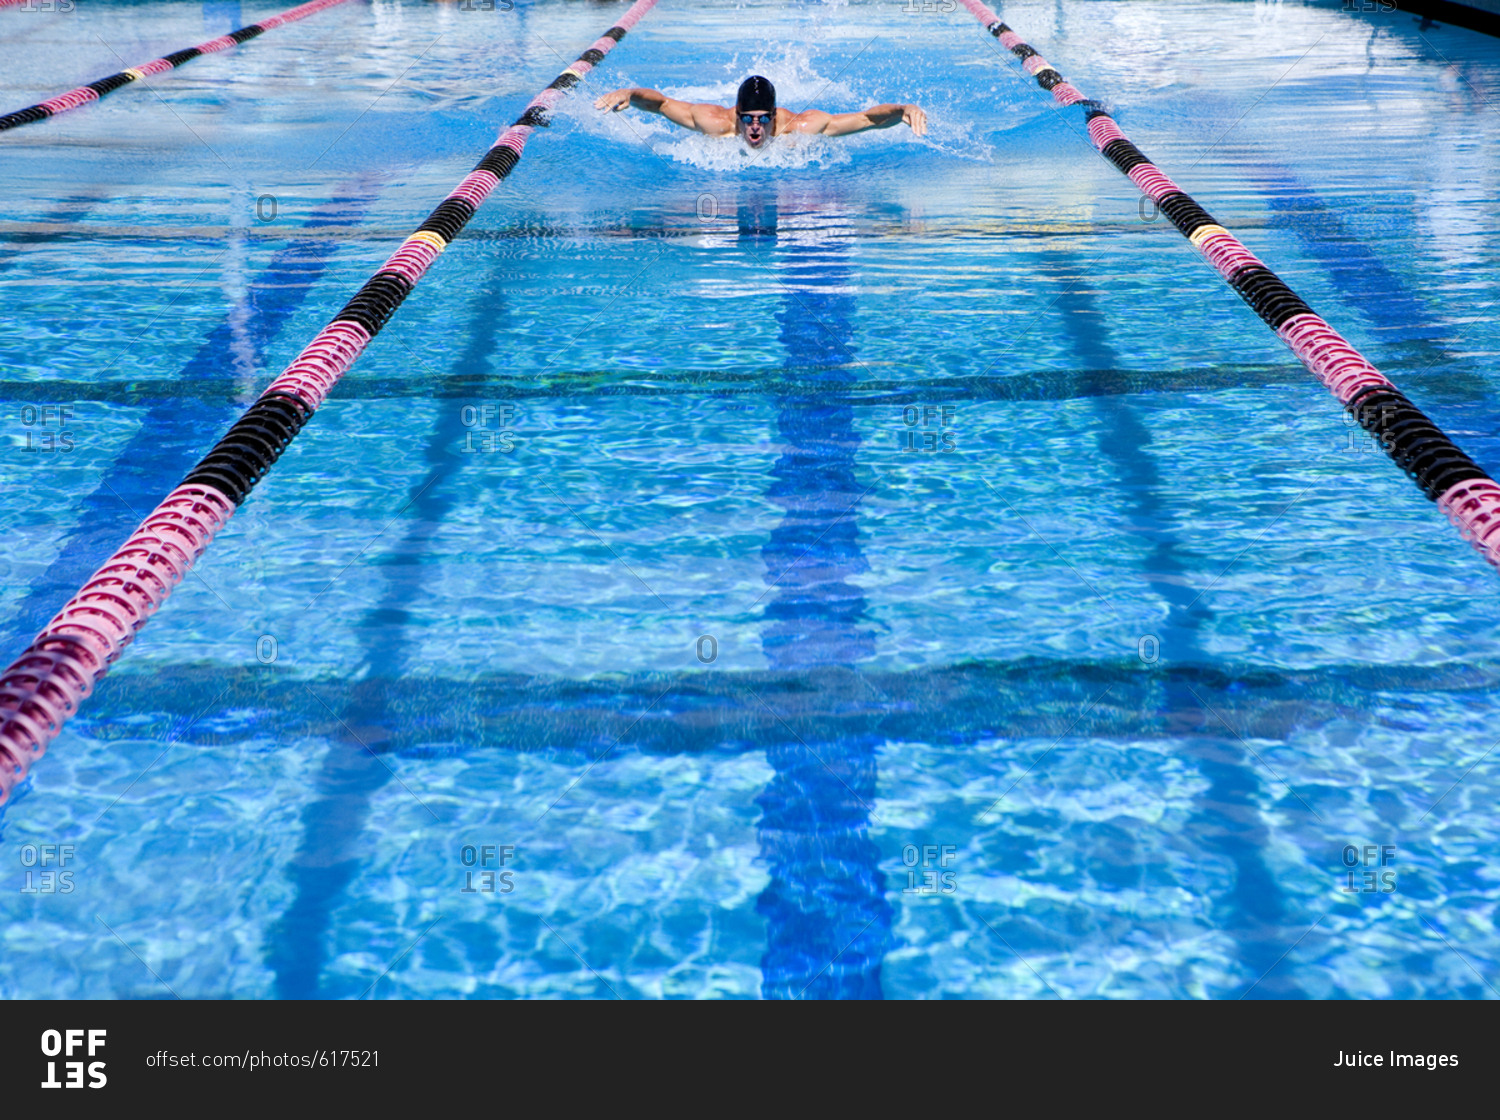 Young man swimming in lane in swimming pool